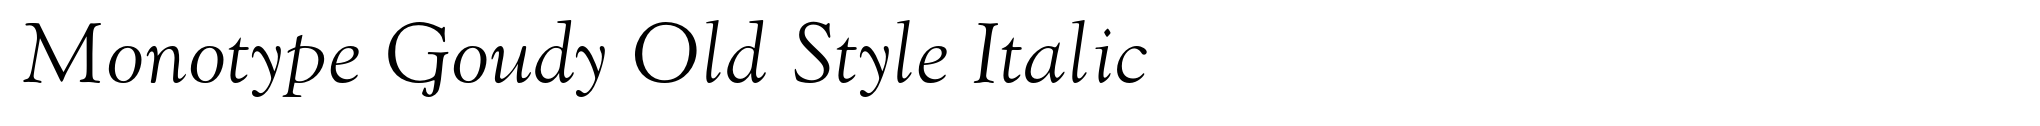 Monotype Goudy Old Style Italic image